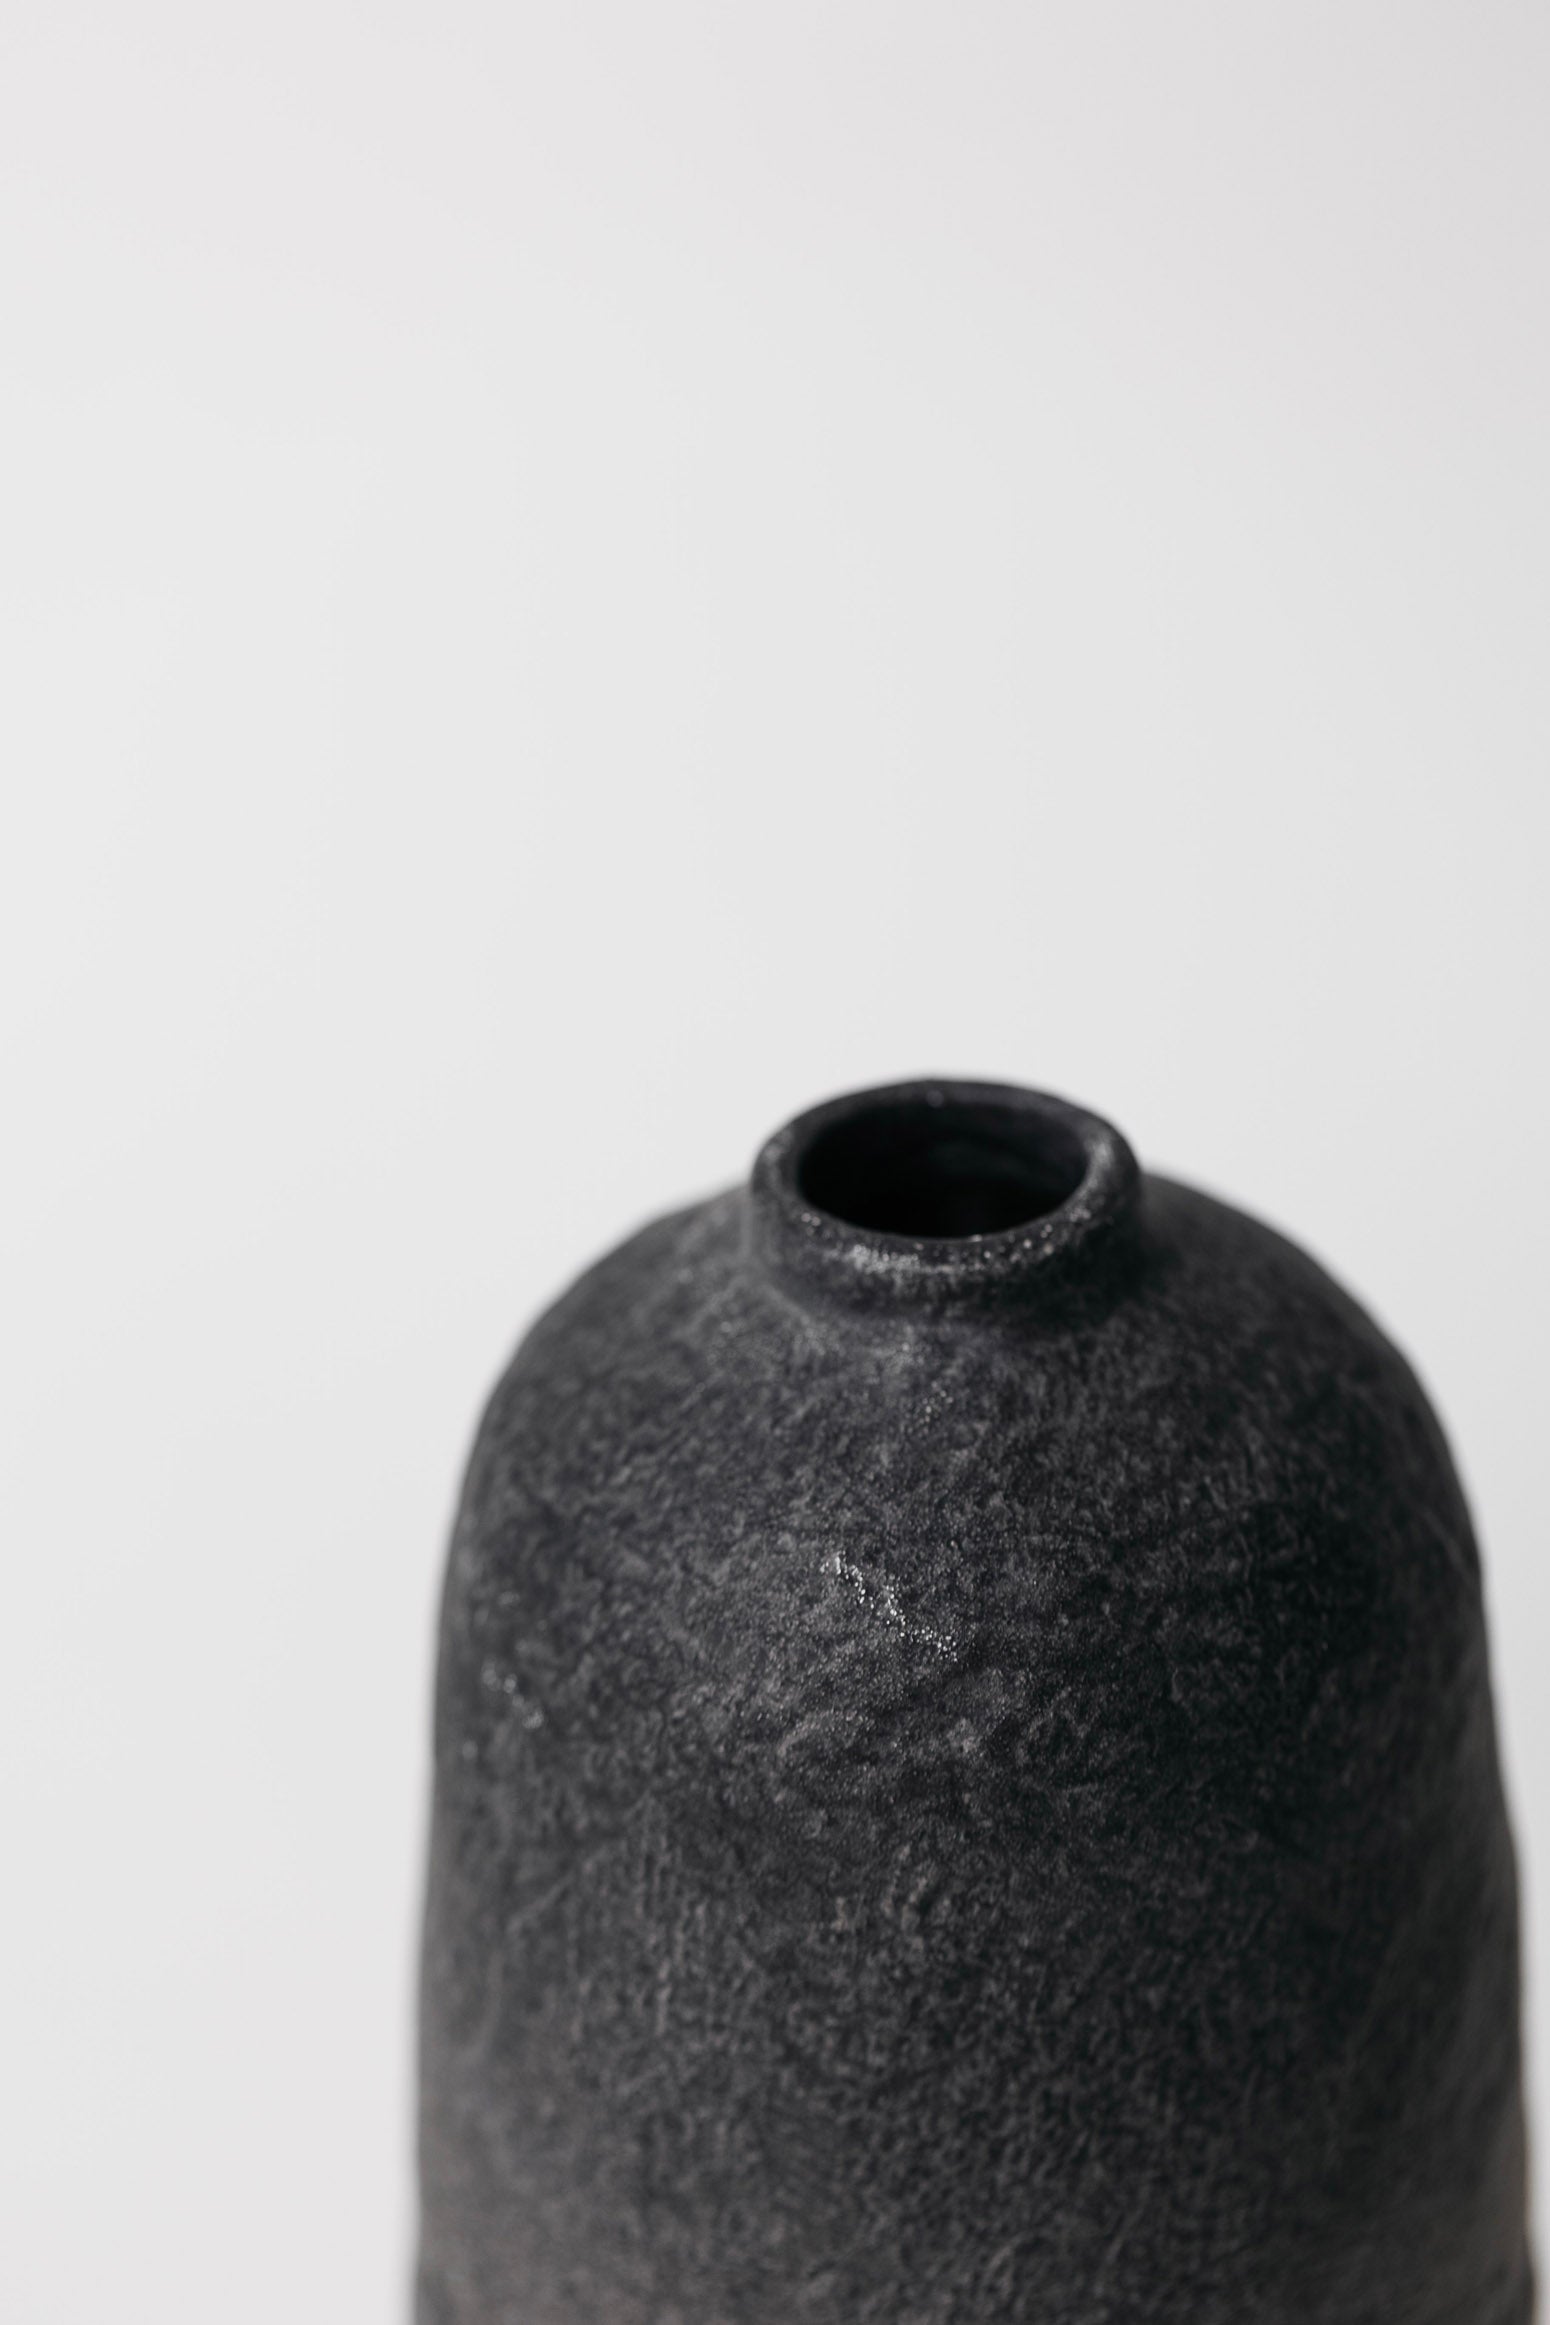 Joanie Textured Vase